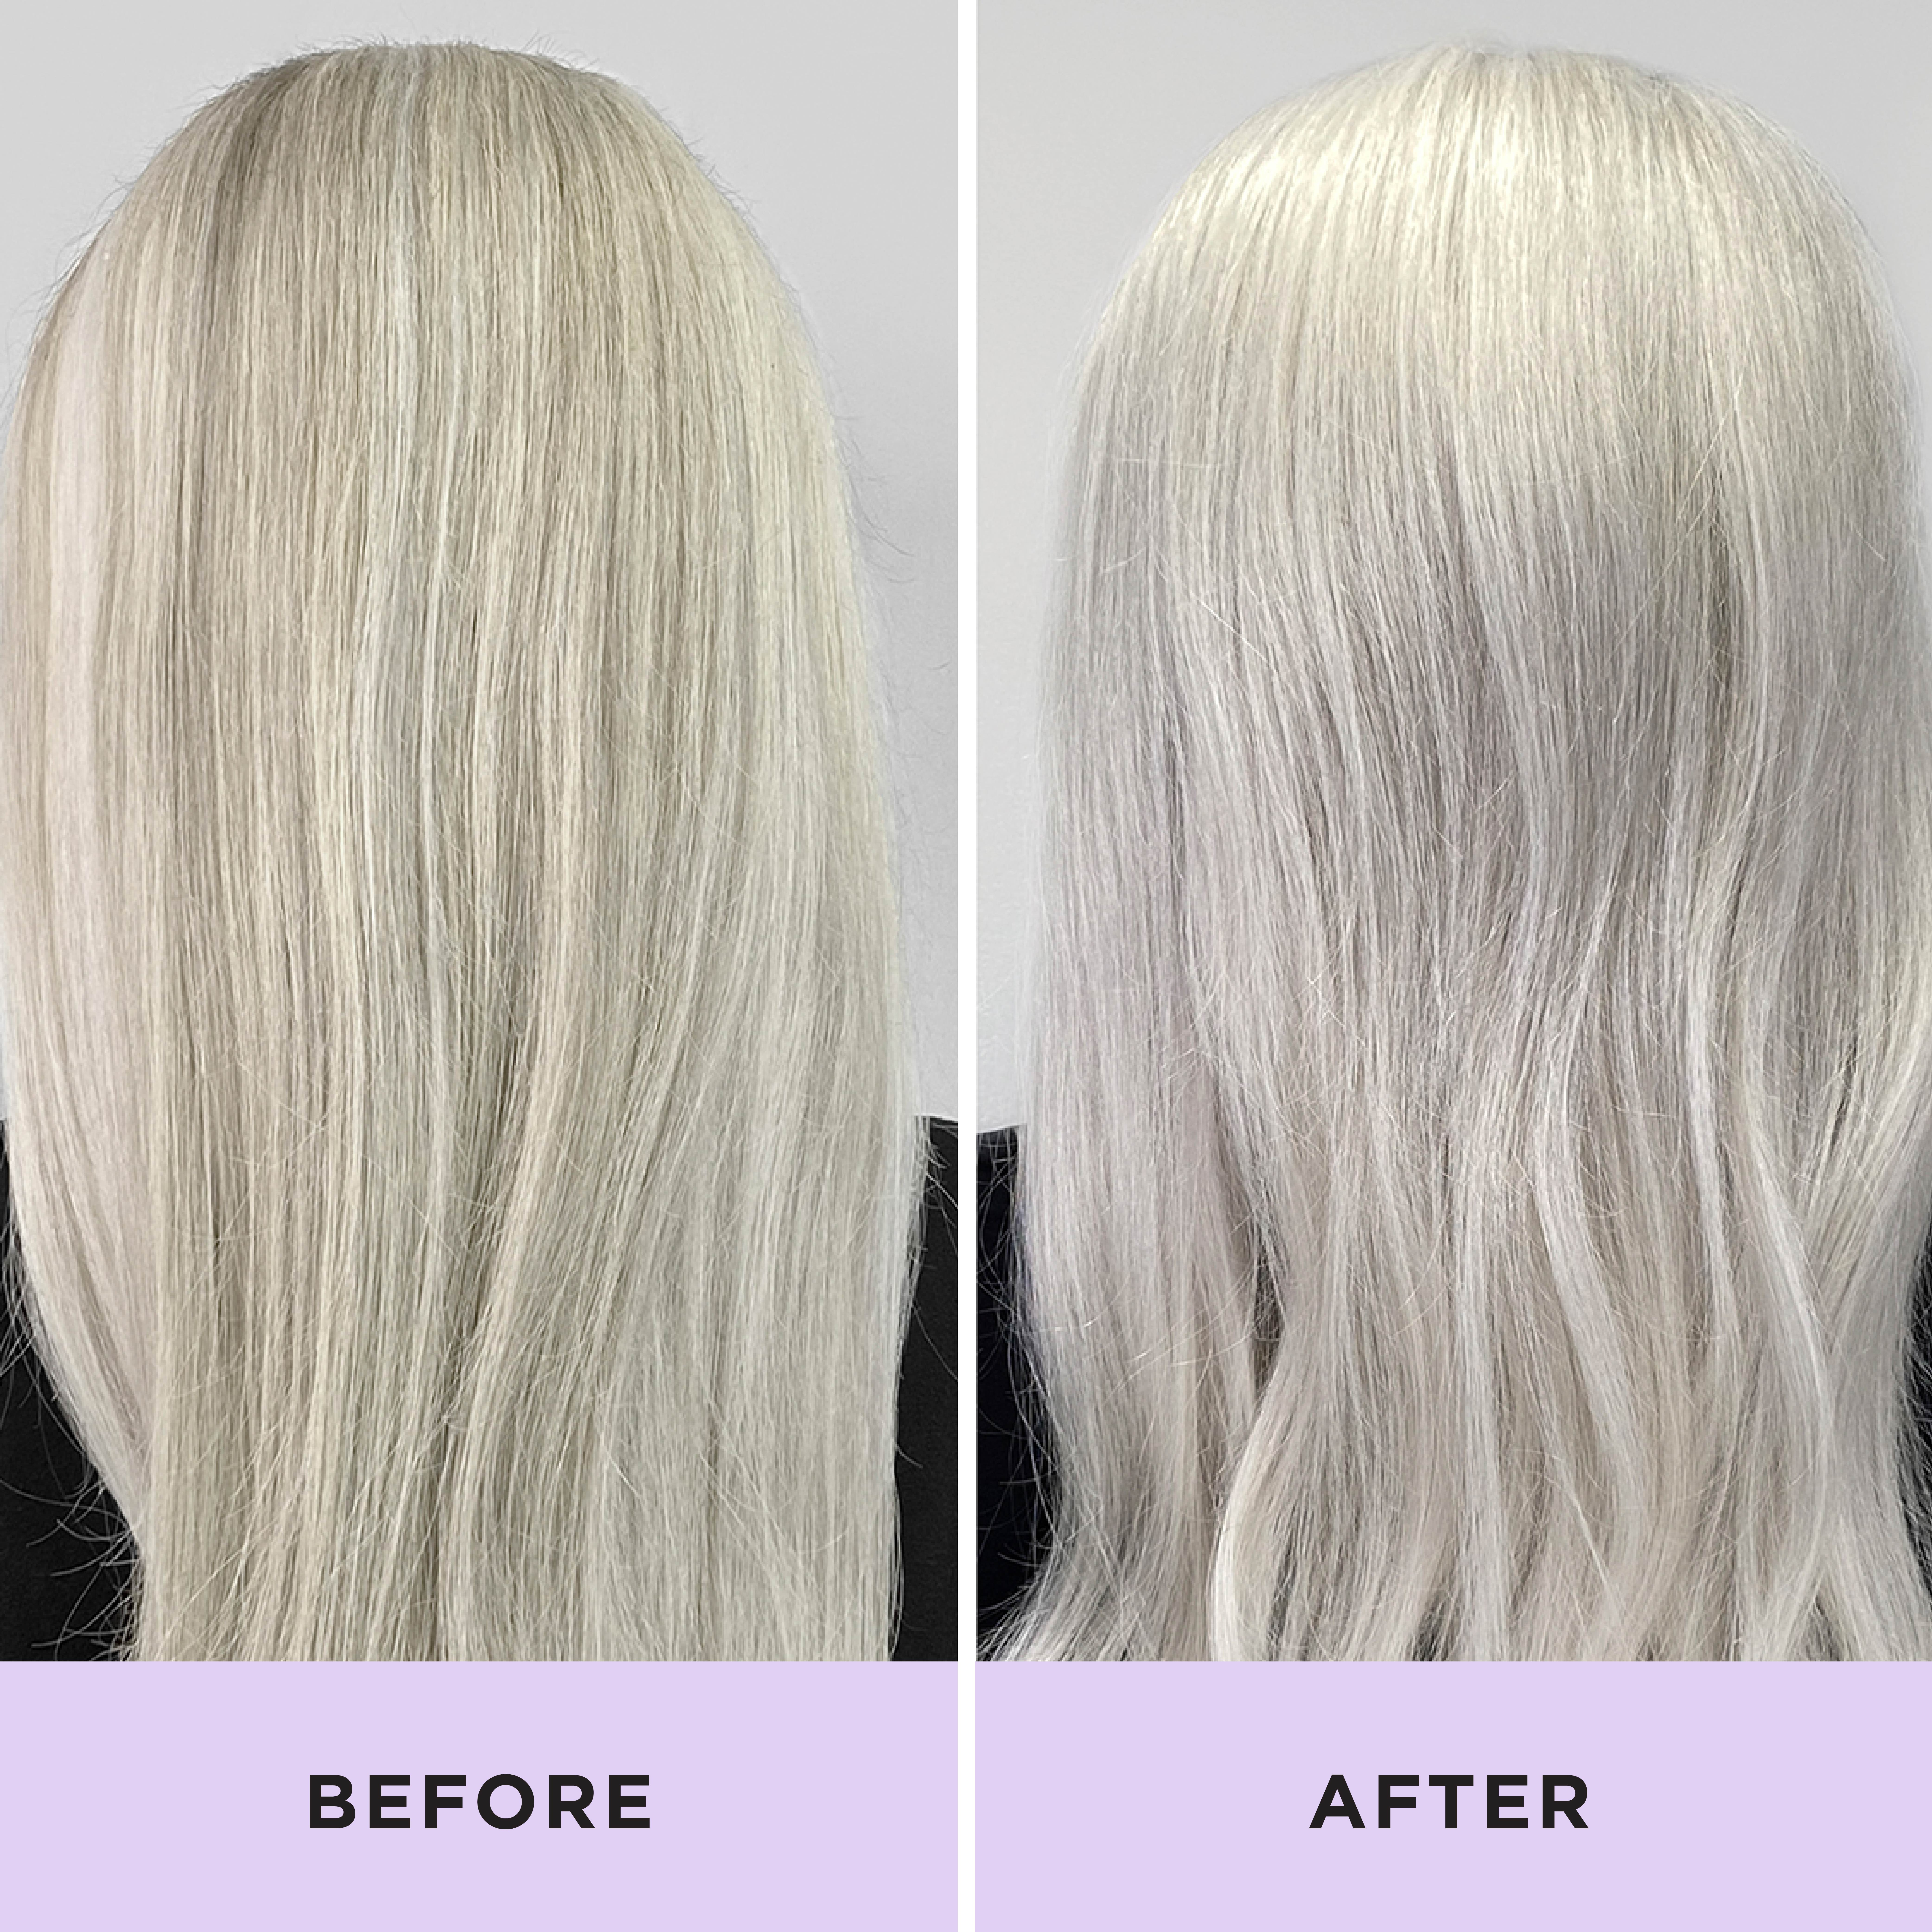 Jhirmack Brightening Purple Shampoo with Collagen, Tones Silver & Blonde Hair Shades, 12 fl oz - image 3 of 11